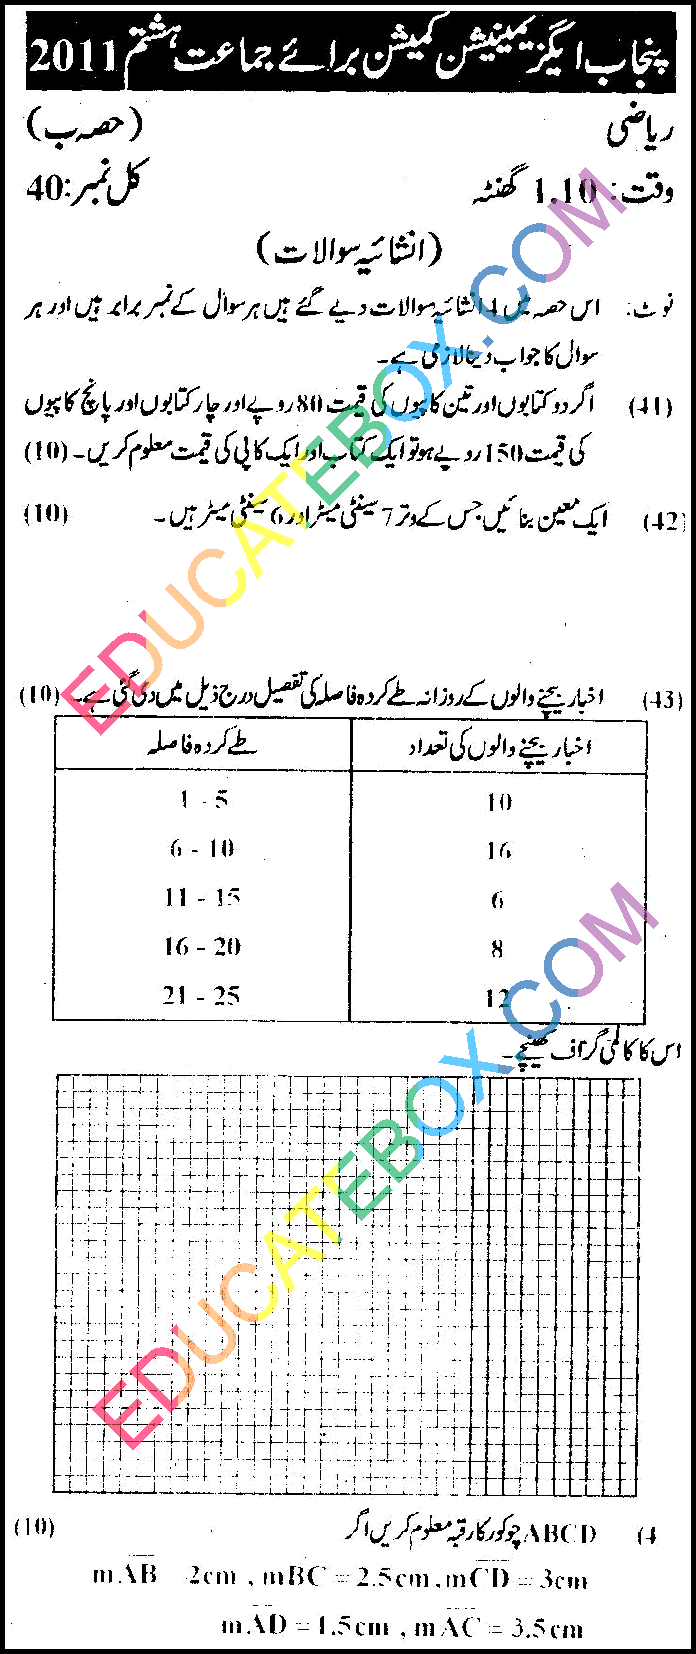 Past Paper 8th Class Maths Punjab Board (PEC) 2011 Subjective Type Page 3 - پیپر ریاضی (حساب) (میتھ) 2011 پنجاب بورڈ انشائیہ طرز